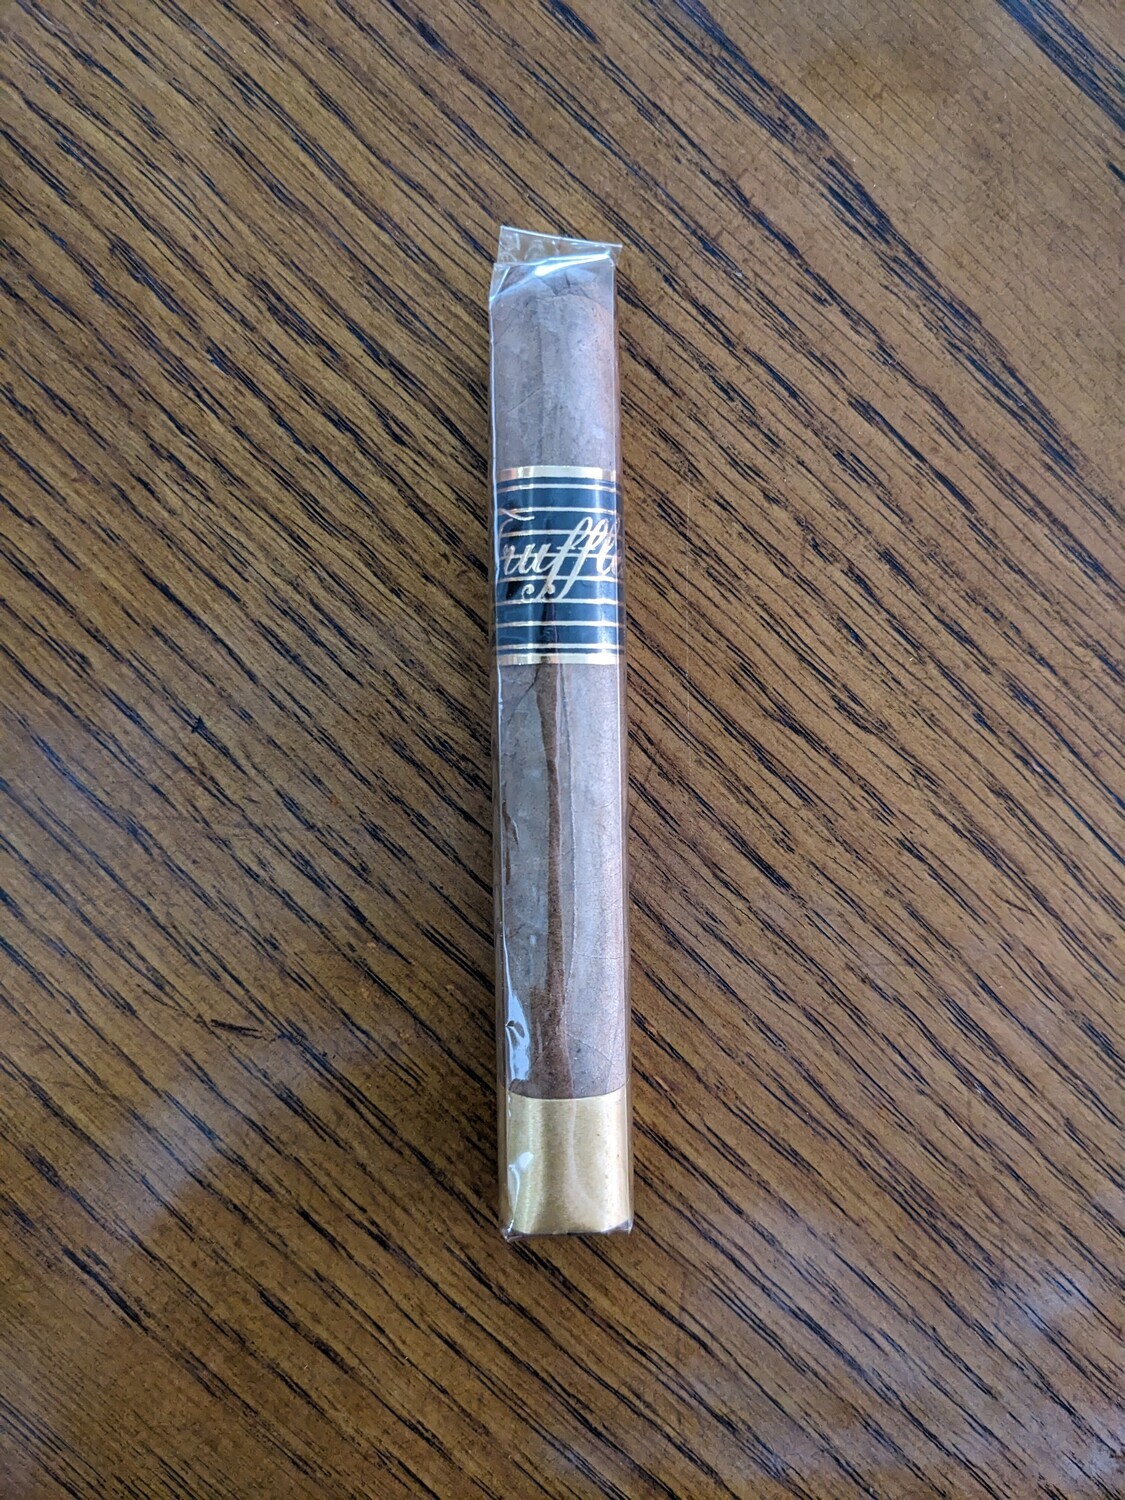 LUJ Truffles Single Cigar Vintage